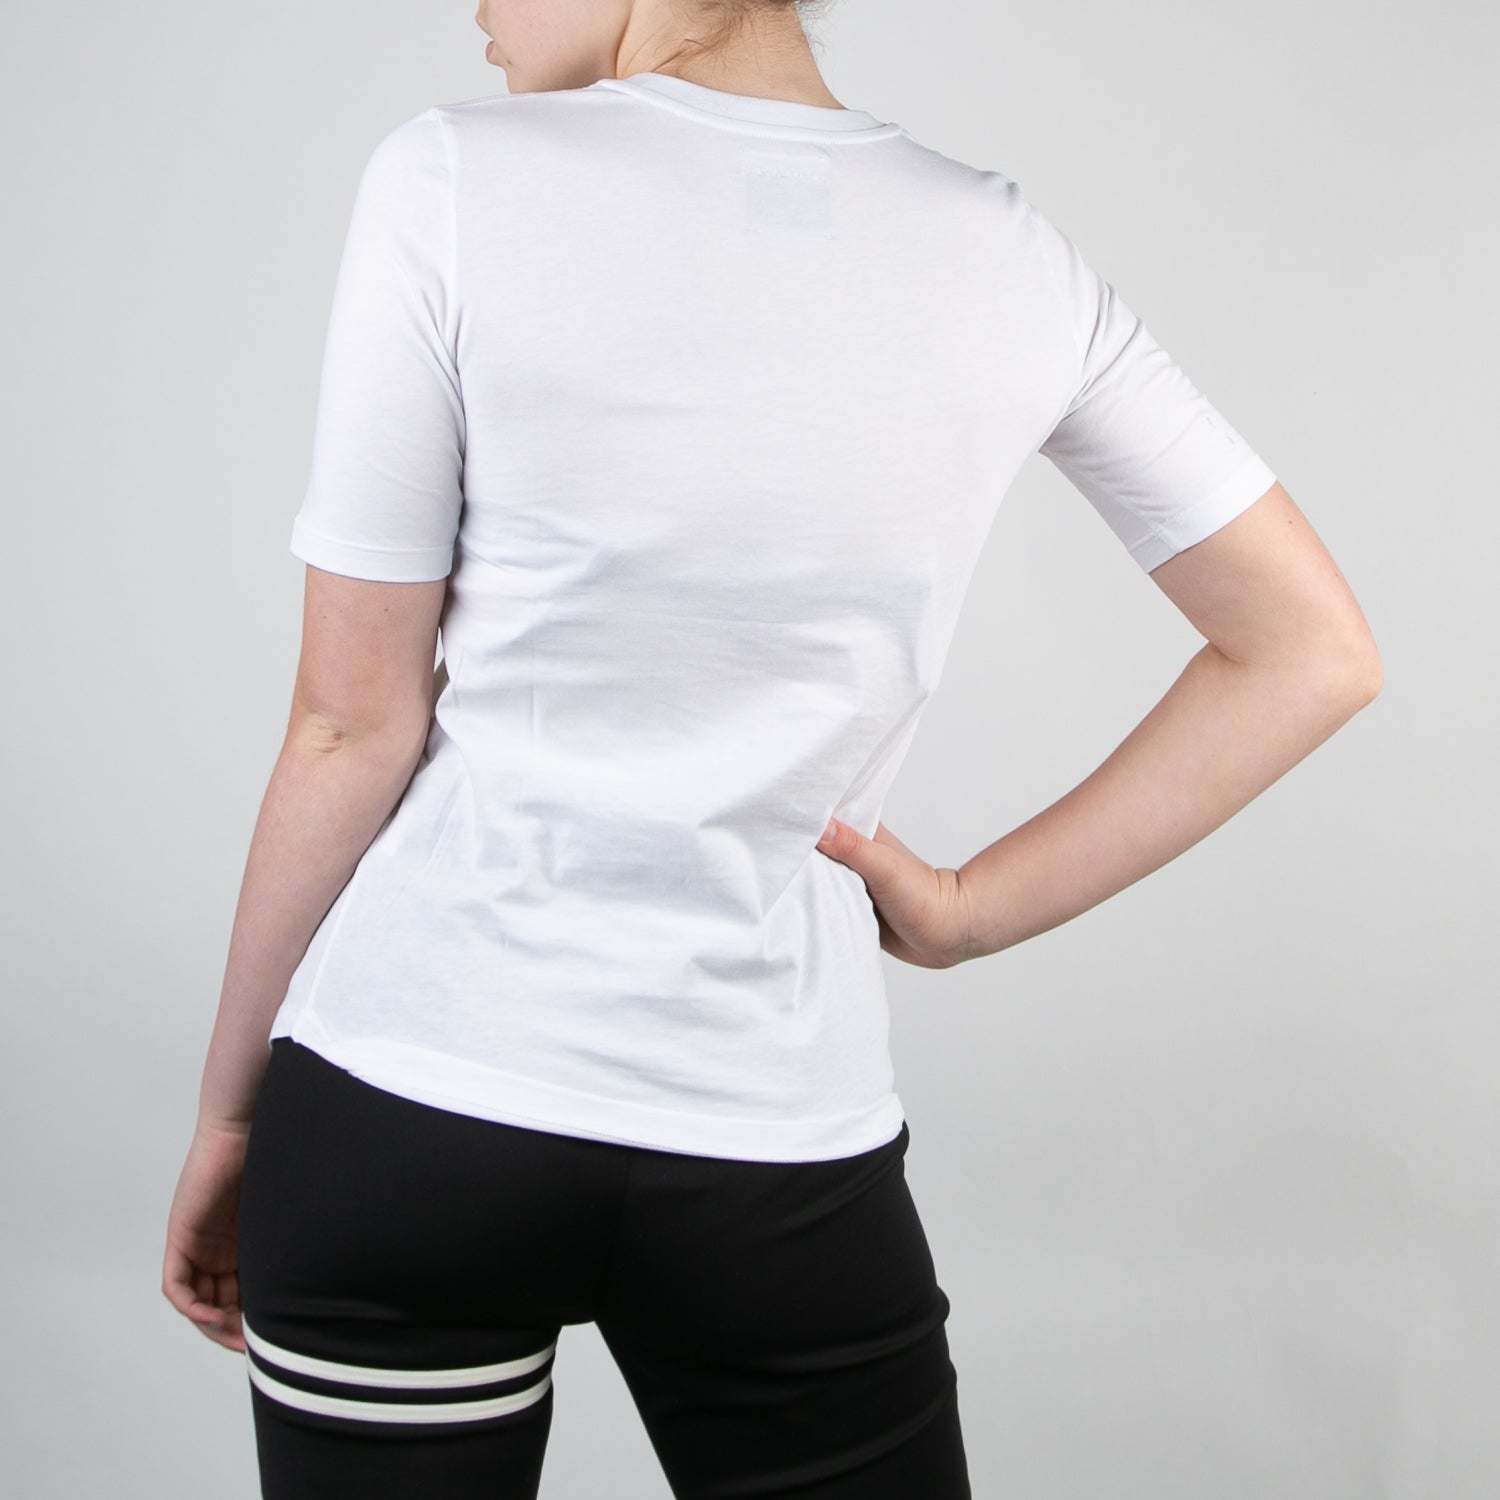 basic women's organic cotton white t-shirt by Secret Location